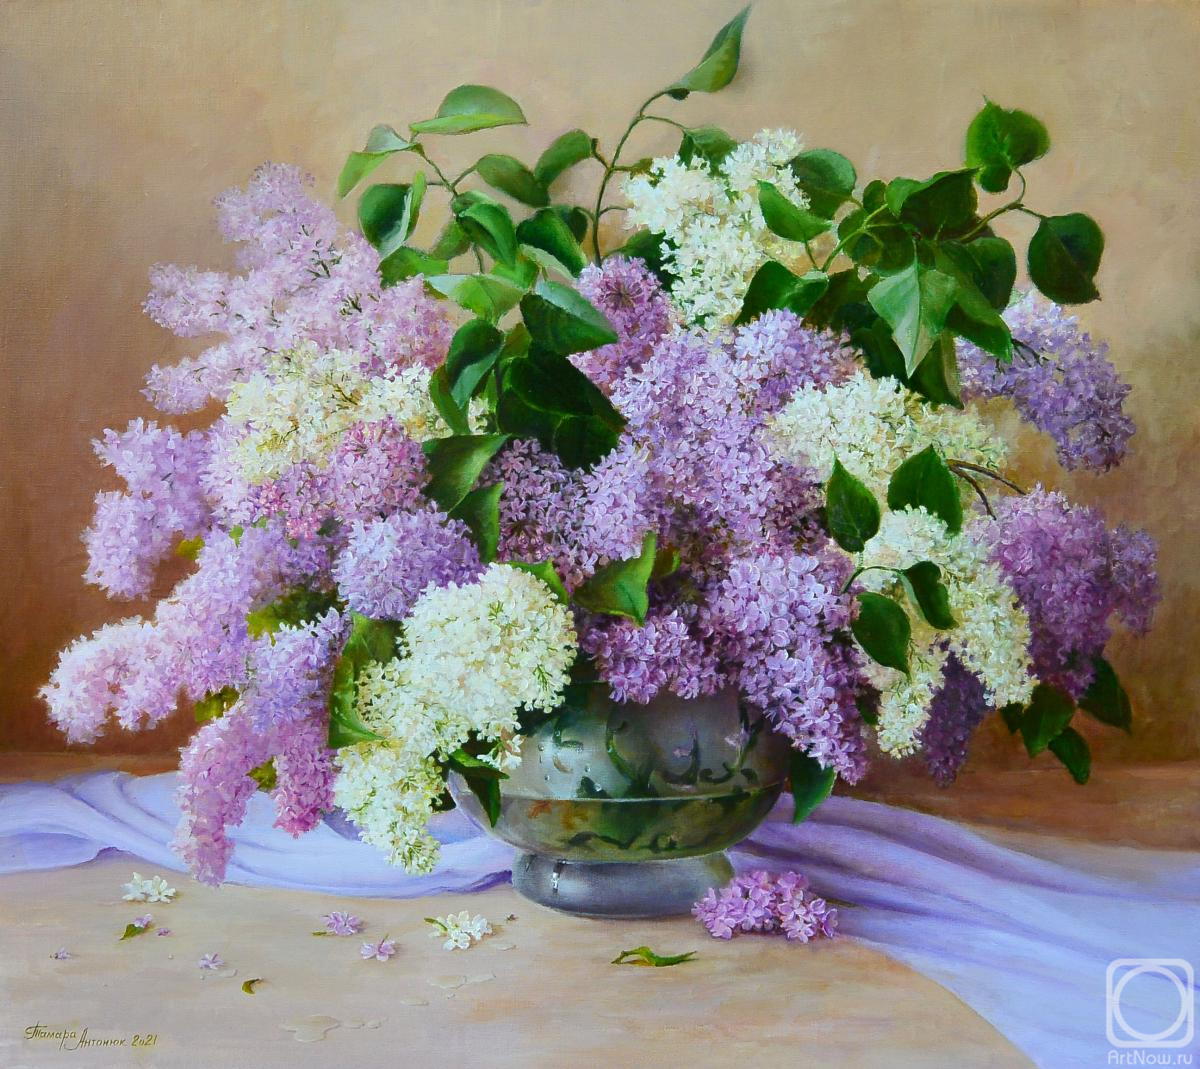 Antonyuk Tamara. Lilac bouquet